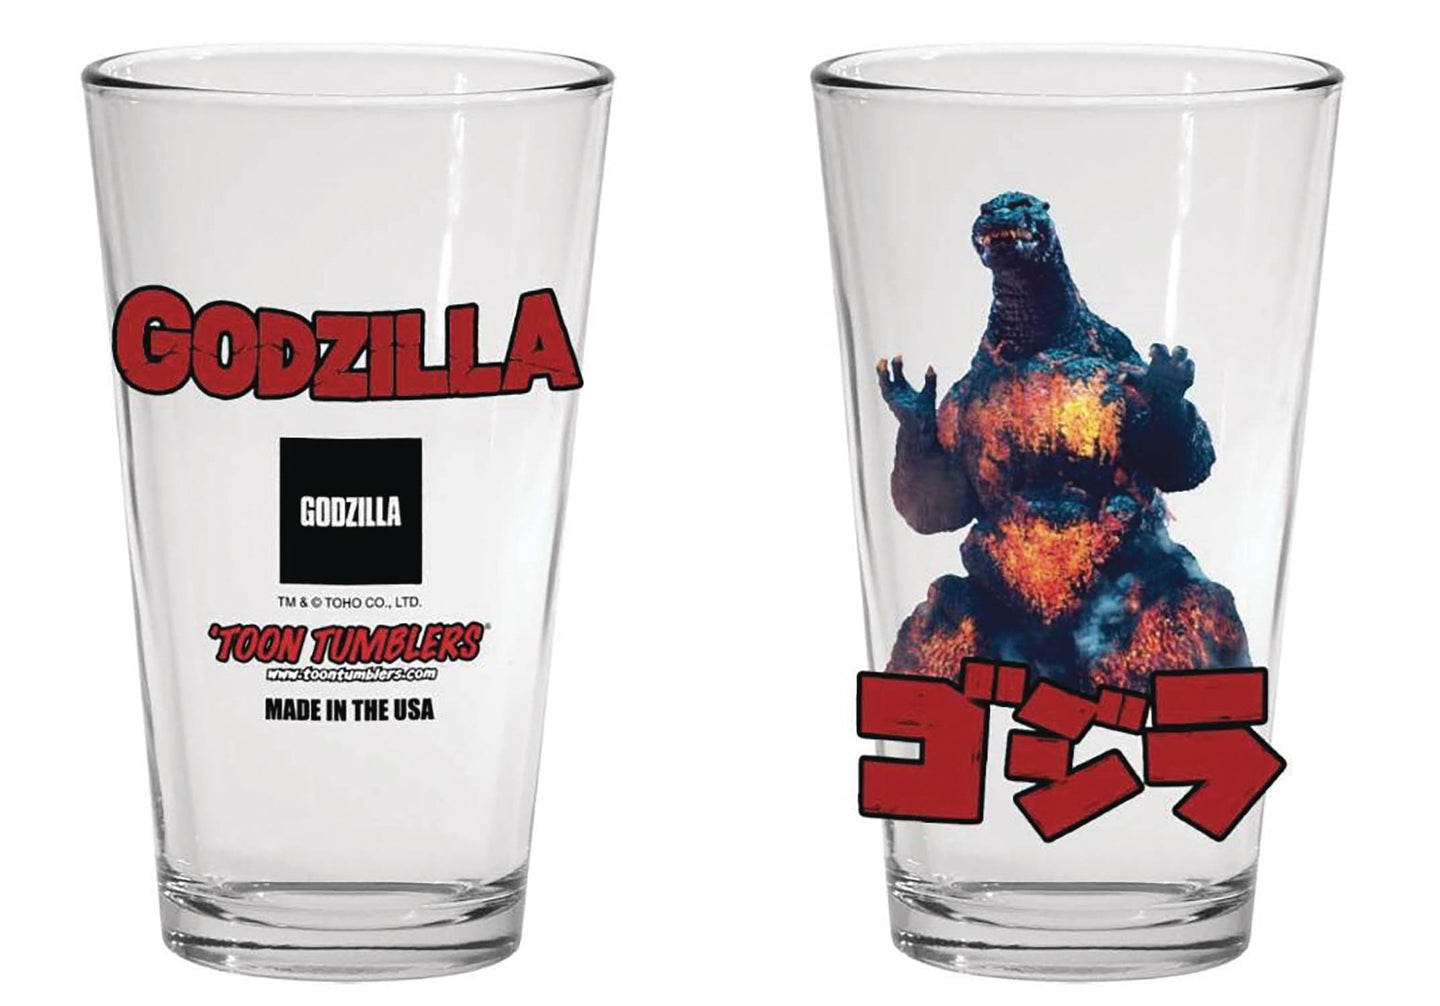 Toon Tumblers Burning Godzilla Pint Glass